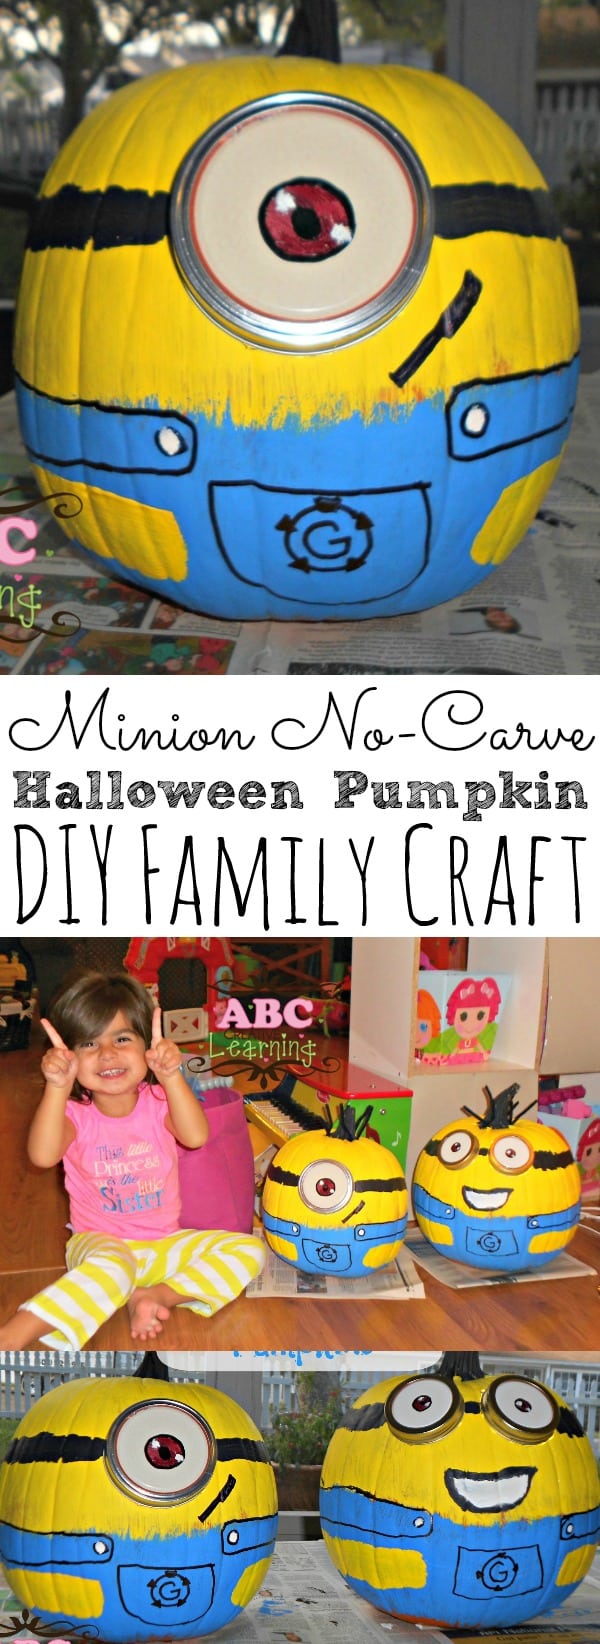 Minion No-Carve Halloween Pumpkin Craft